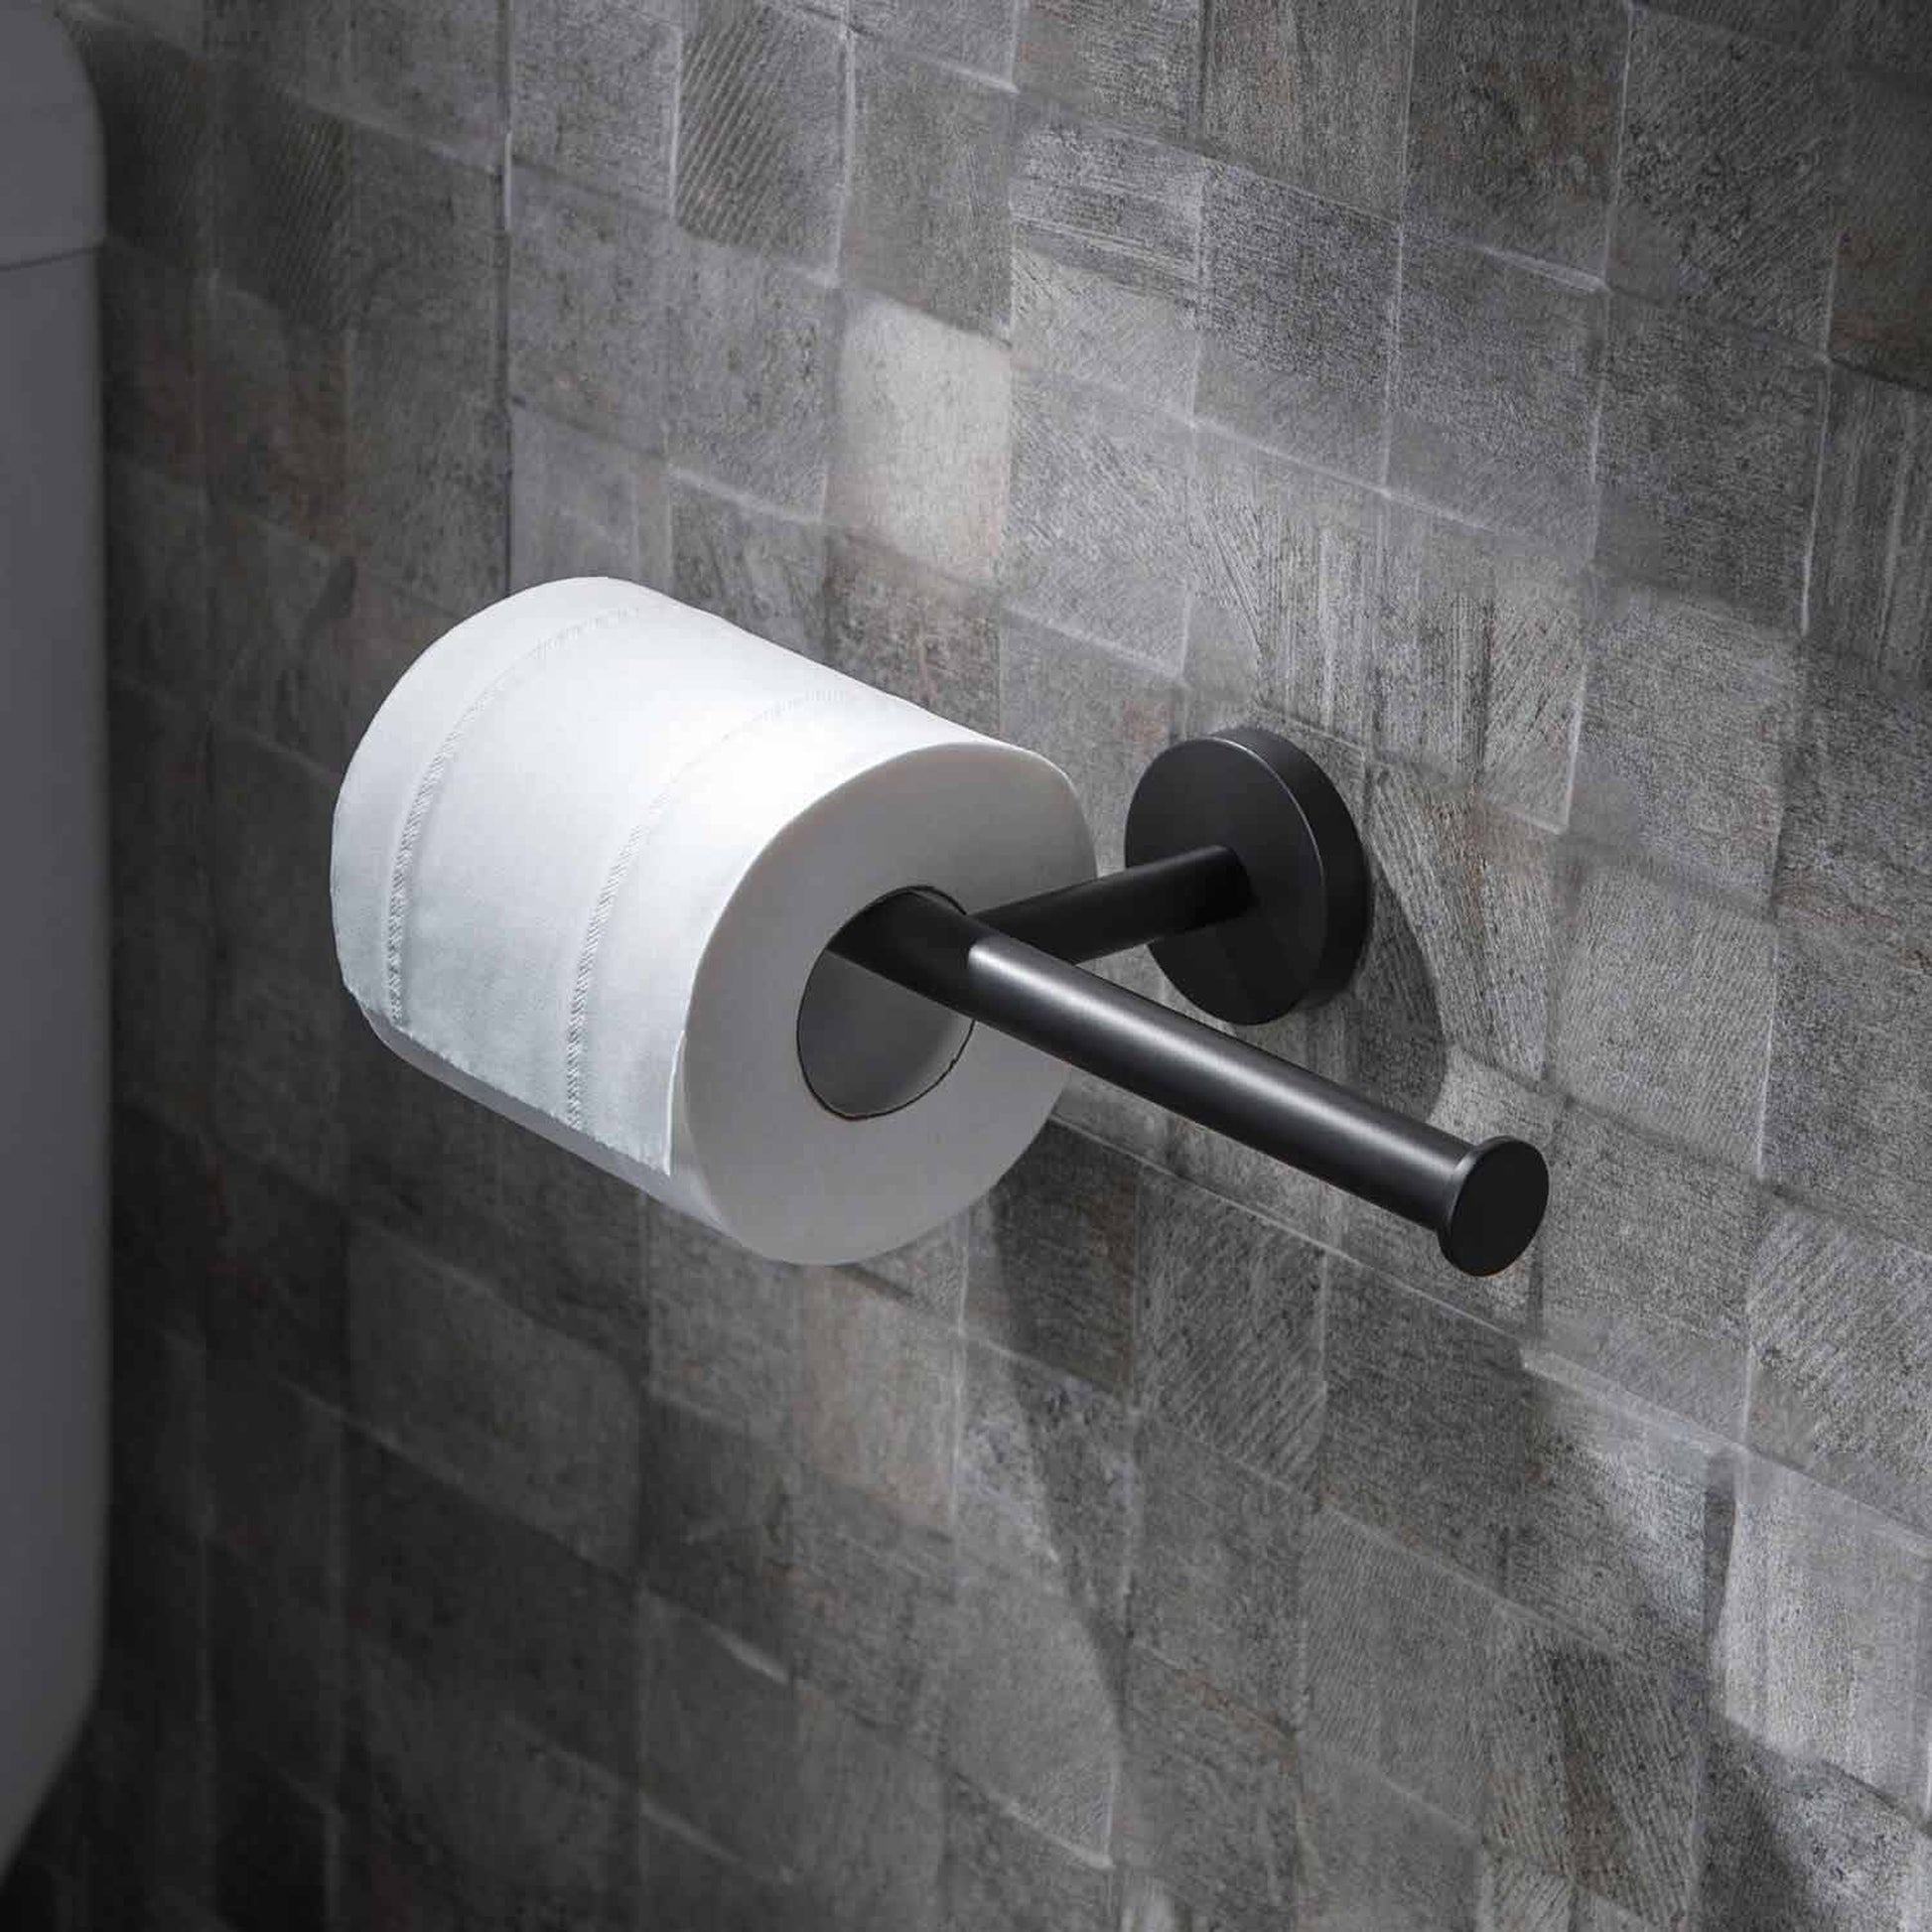 KIBI Circular Brass Bathroom Double Toilet Paper Holder in Matte Black Finish